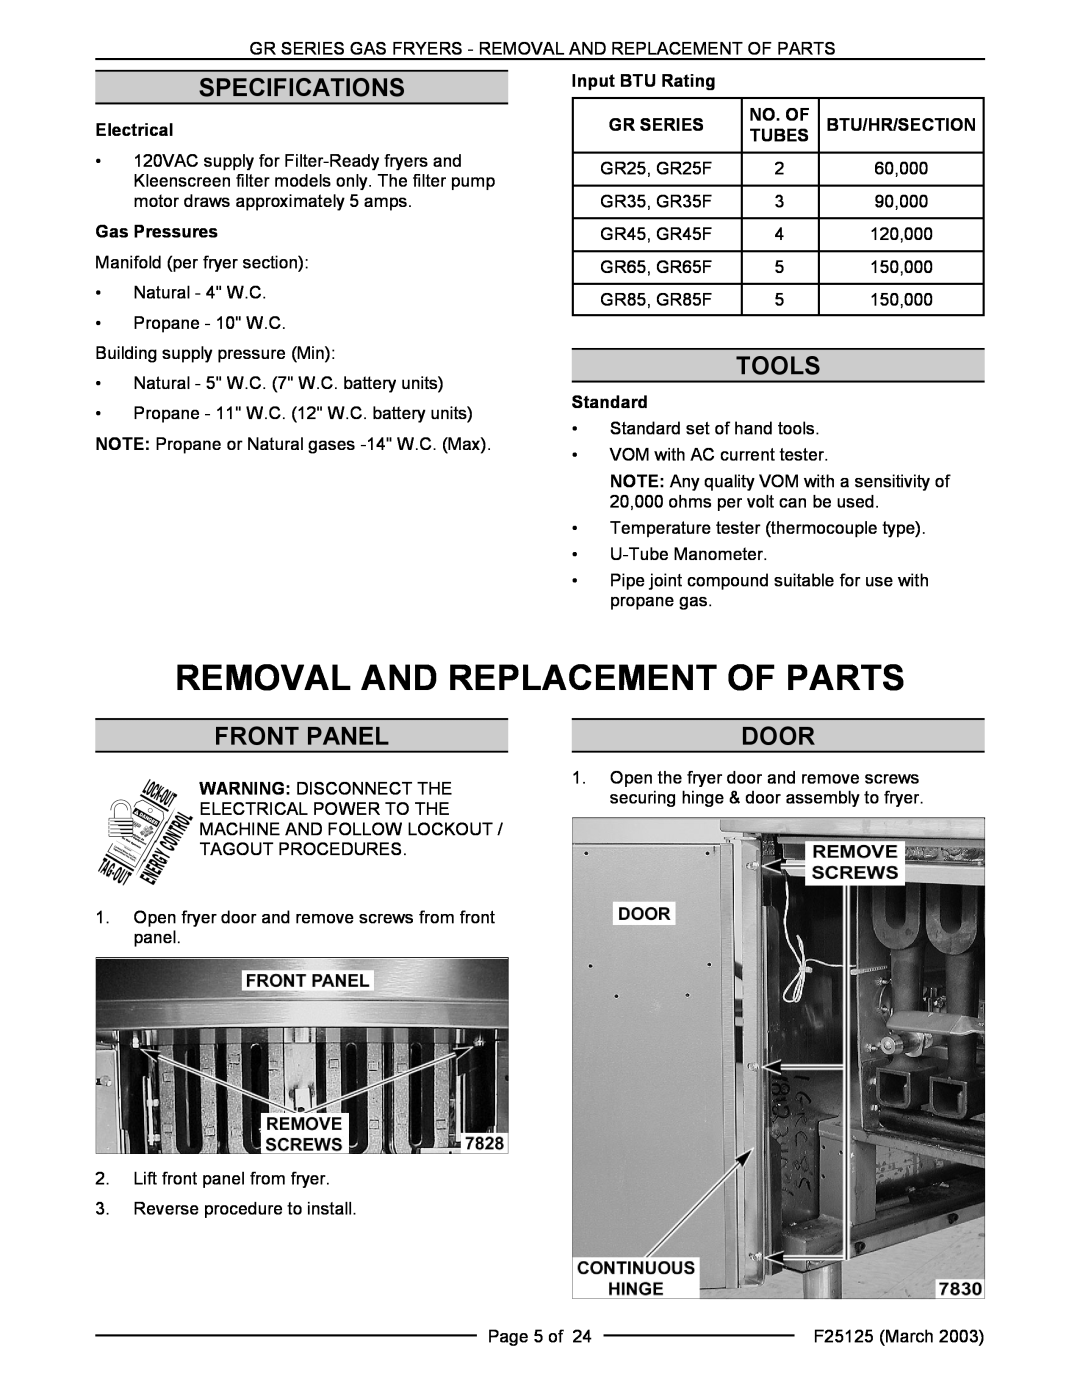 Vulcan-Hart GR45F, GR85F, GR65F, GR35F, GR25 Removal And Replacement Of Parts, Specifications, Tools, Front Panel, Door 